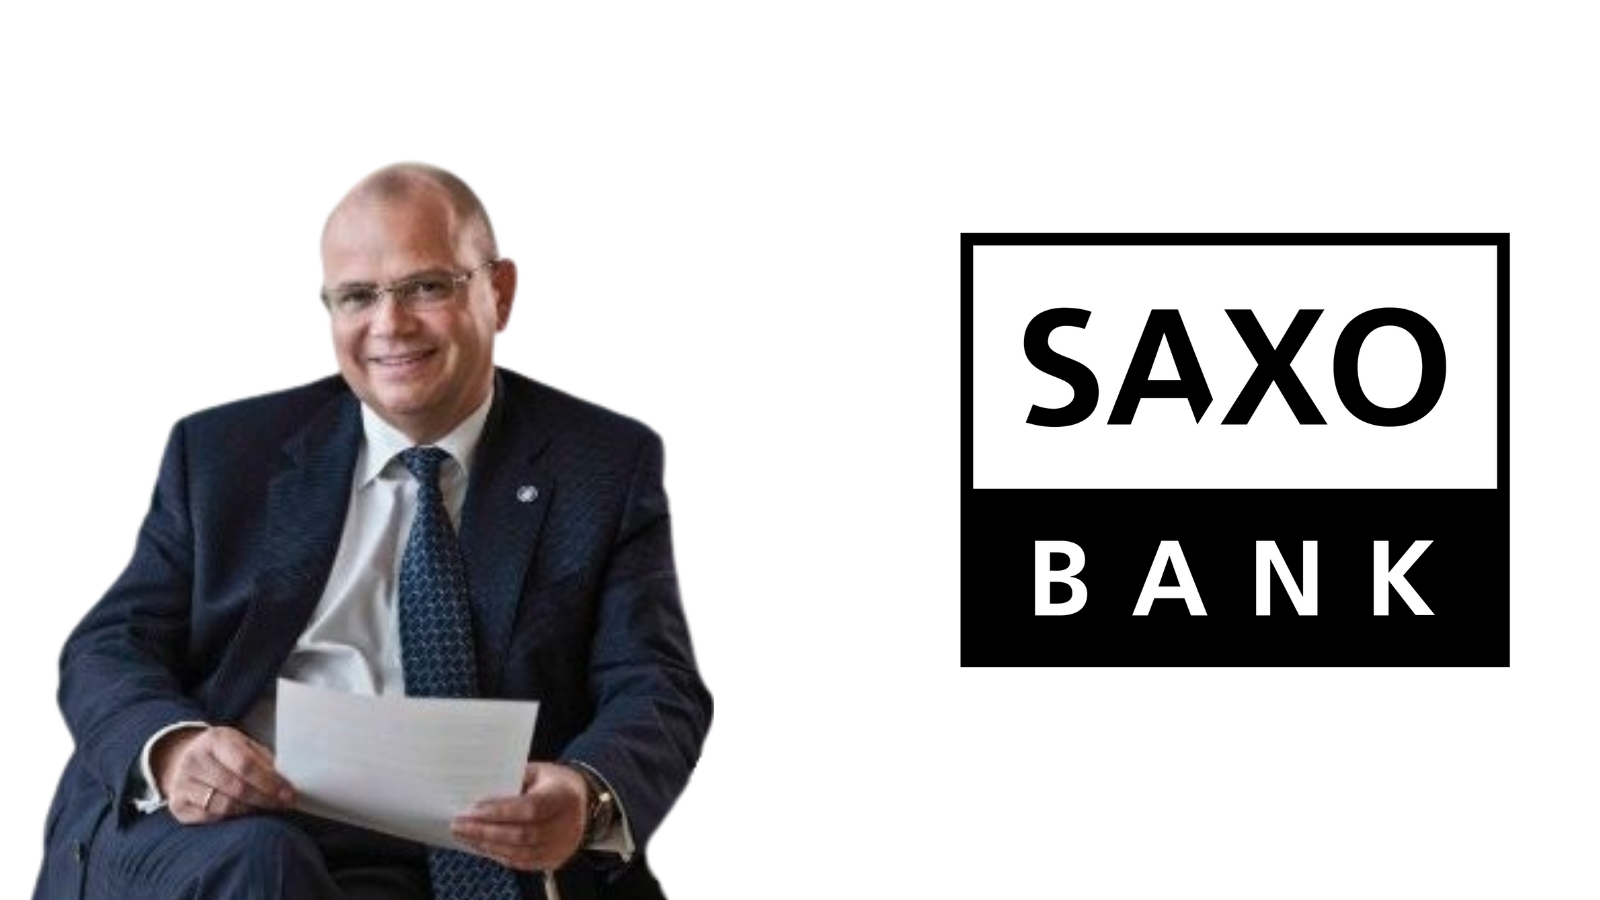 Vestas CEO Henrik Andersen joins Saxo Bank’s Board of Directors